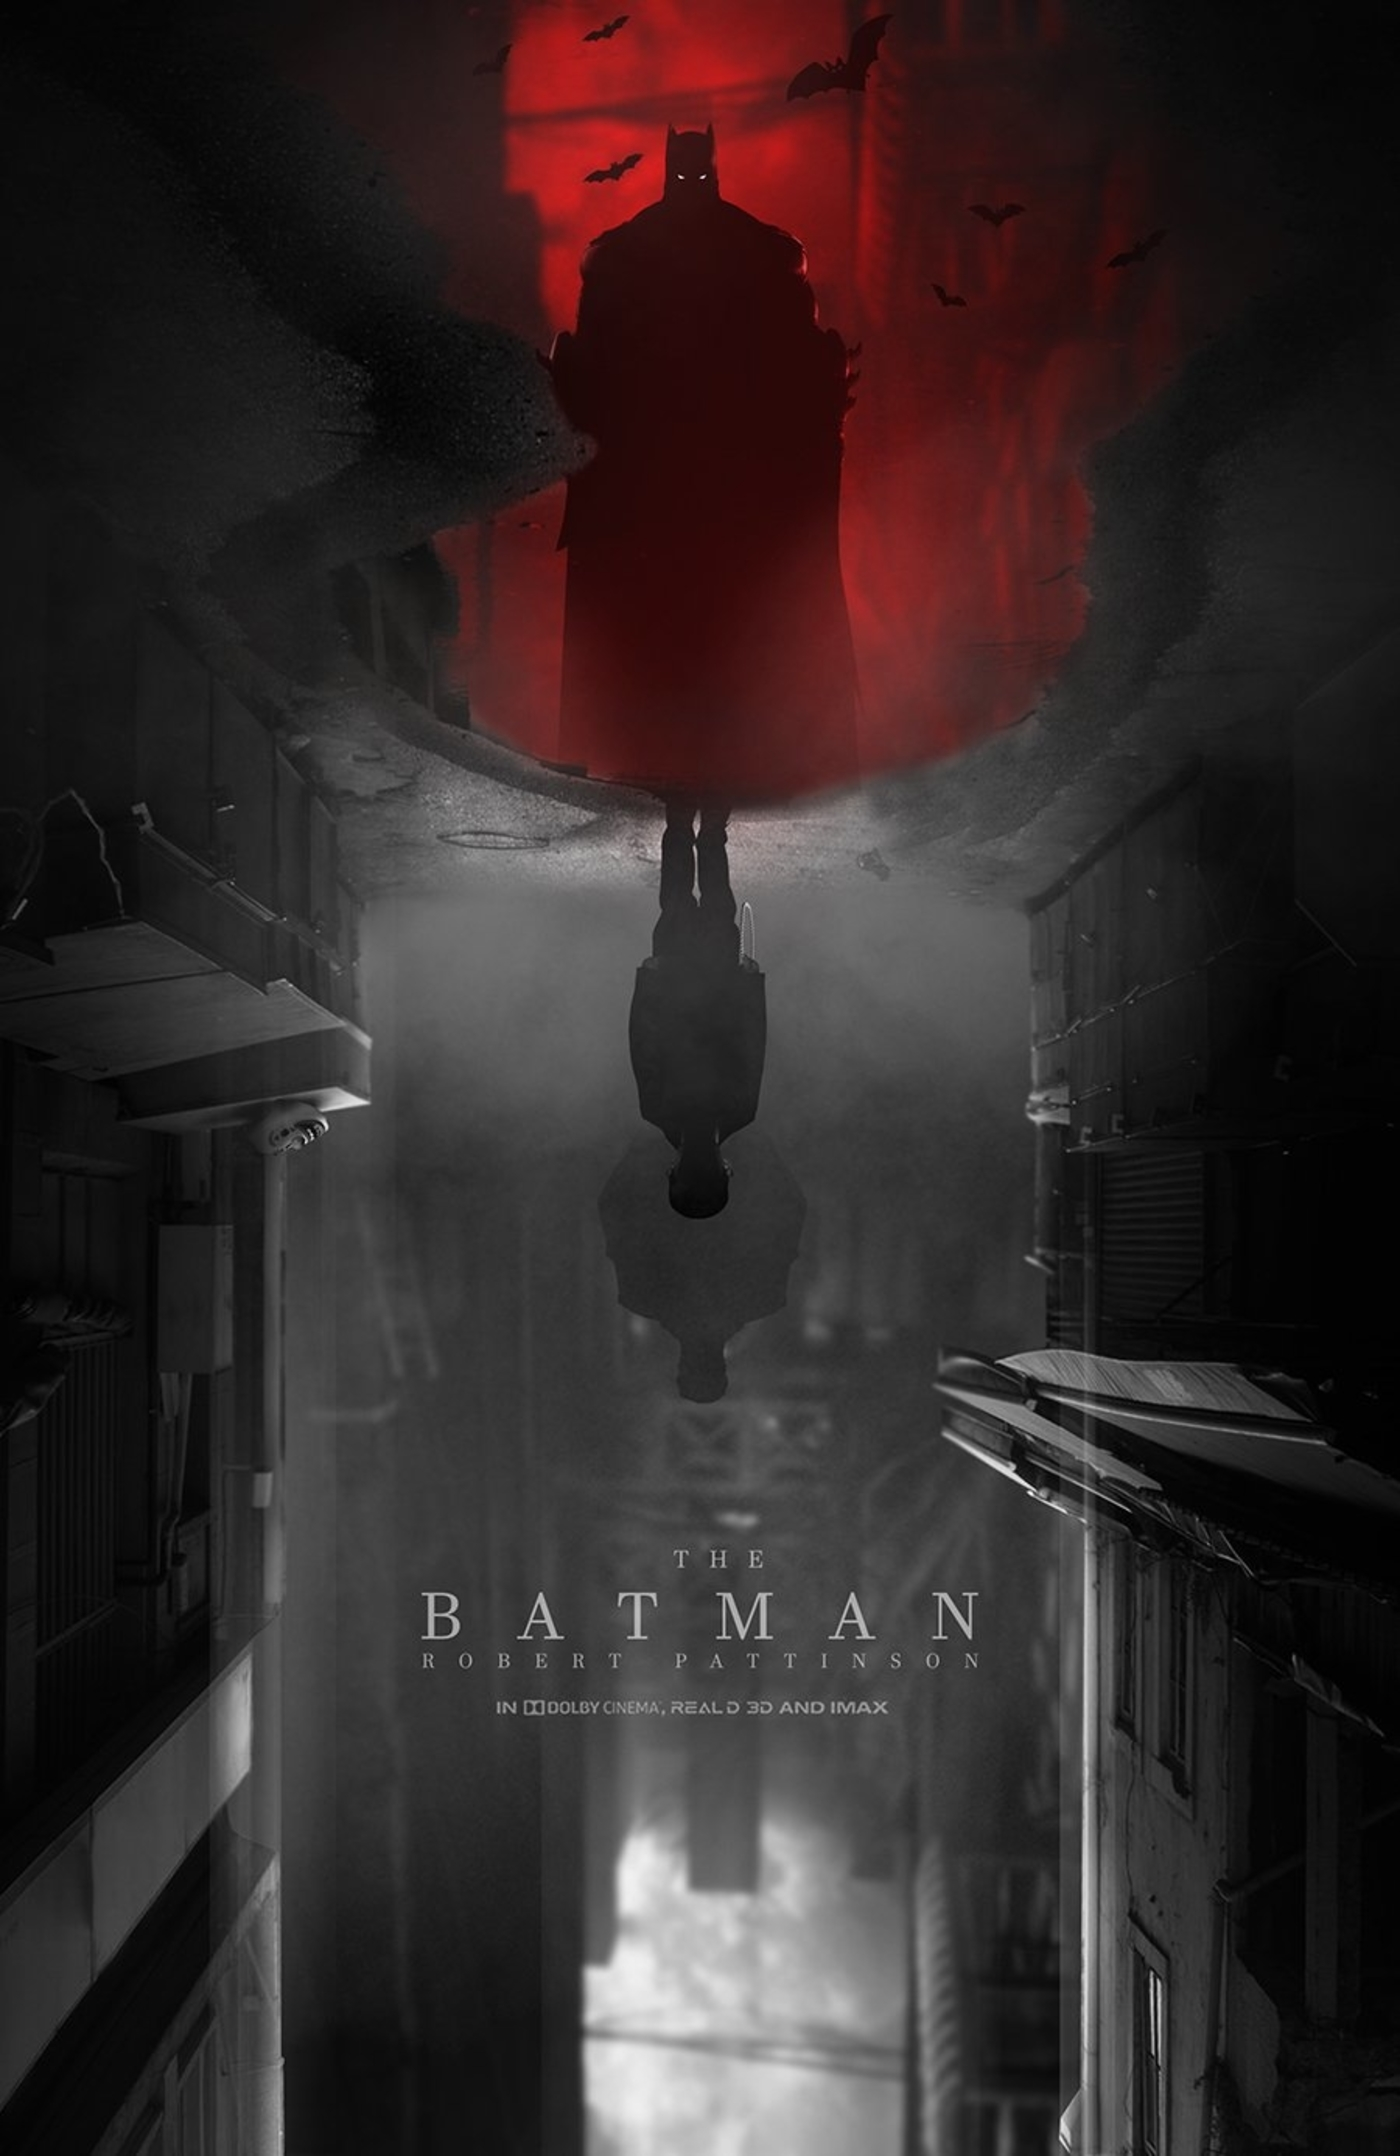 Free download The Batman 2021 [1400 2156] by Boss Logic Batman artwork [1400x2156] for your Desktop, Mobile & Tablet. Explore The Batman 2021 Wallpaper. The Batman Wallpaper, Beware The